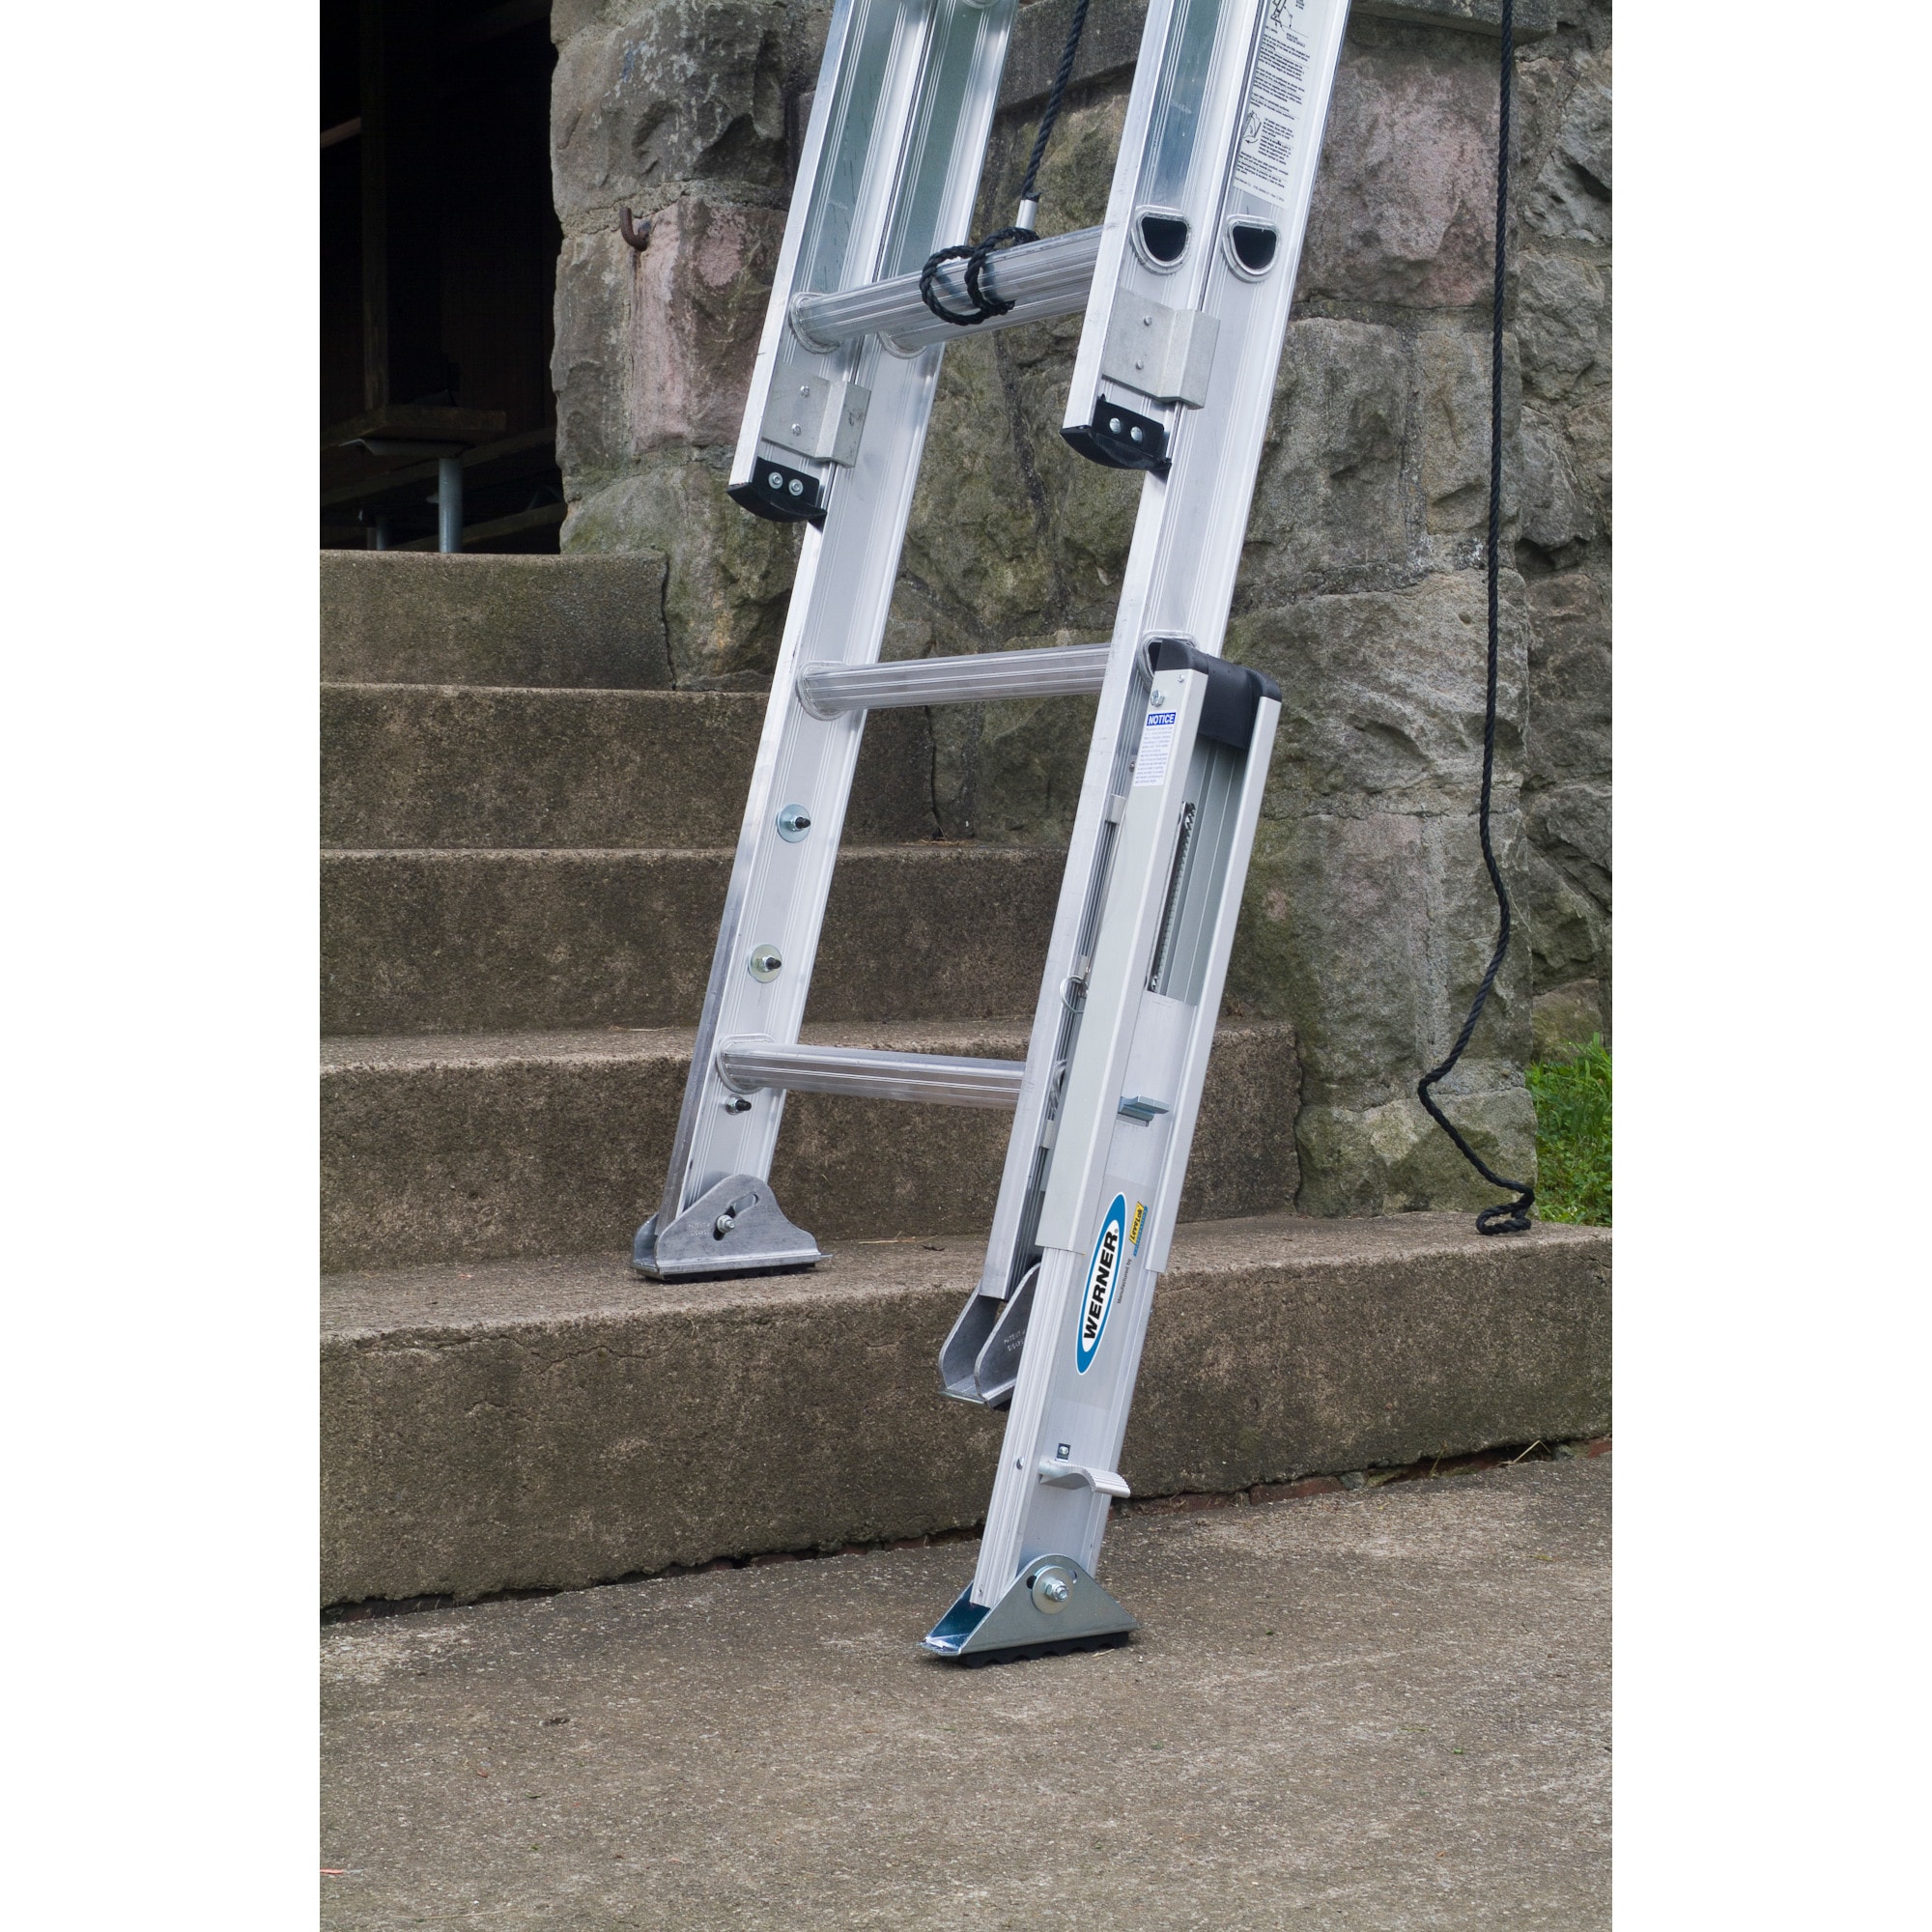 Ladder Leg Leveler Stabilizer Pair Accessories Building Materials Tool Kit NEW 